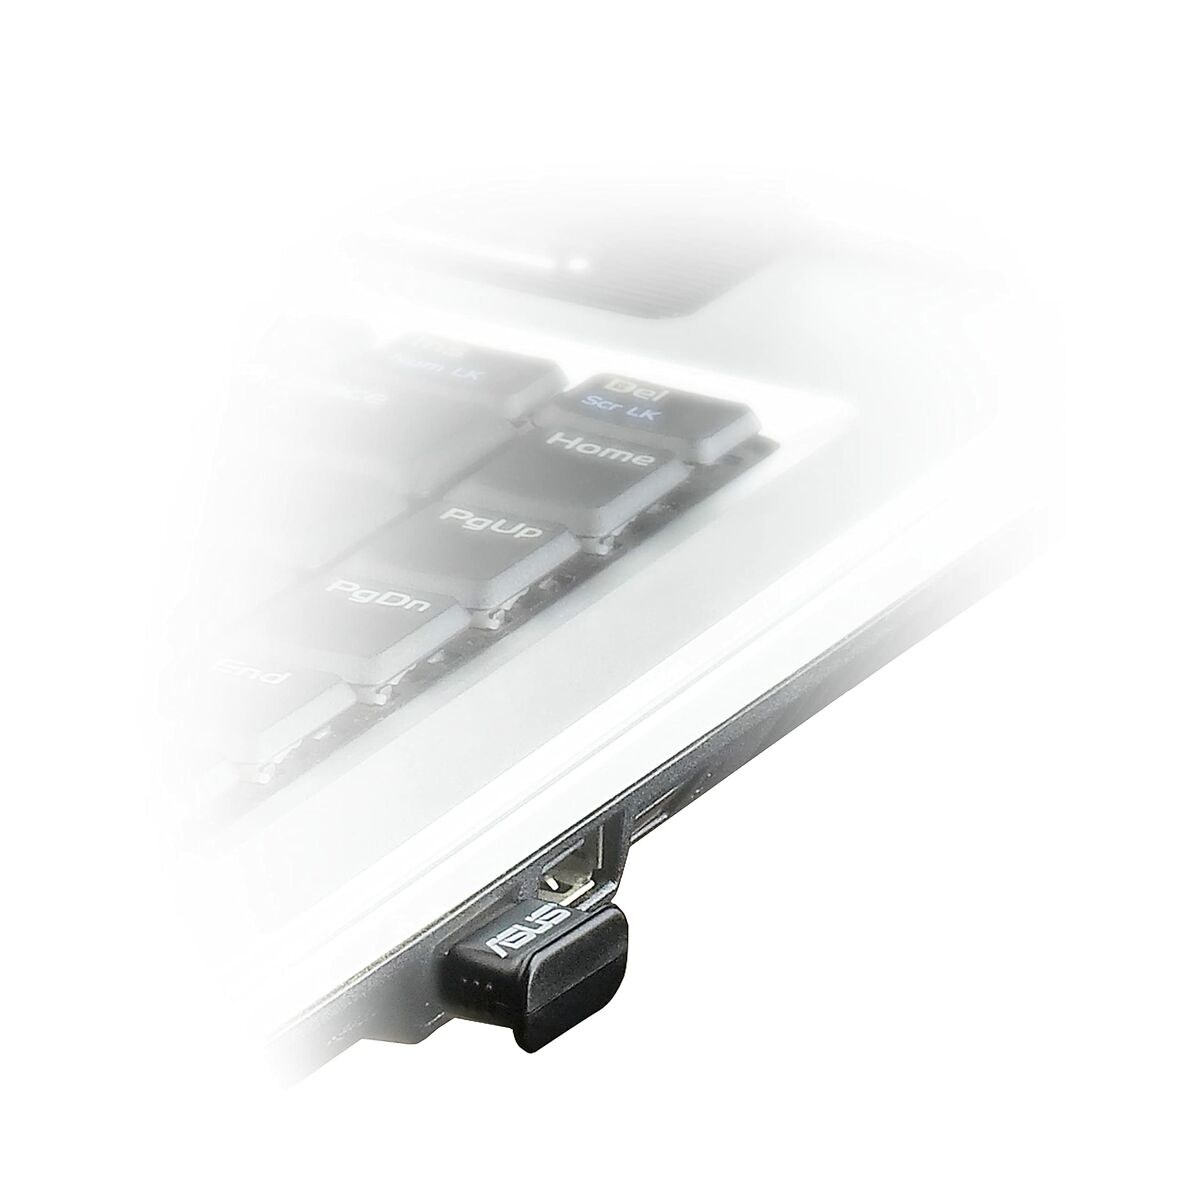 Adaptador Bluetooth Asus 90IG0070-BW0600 USB